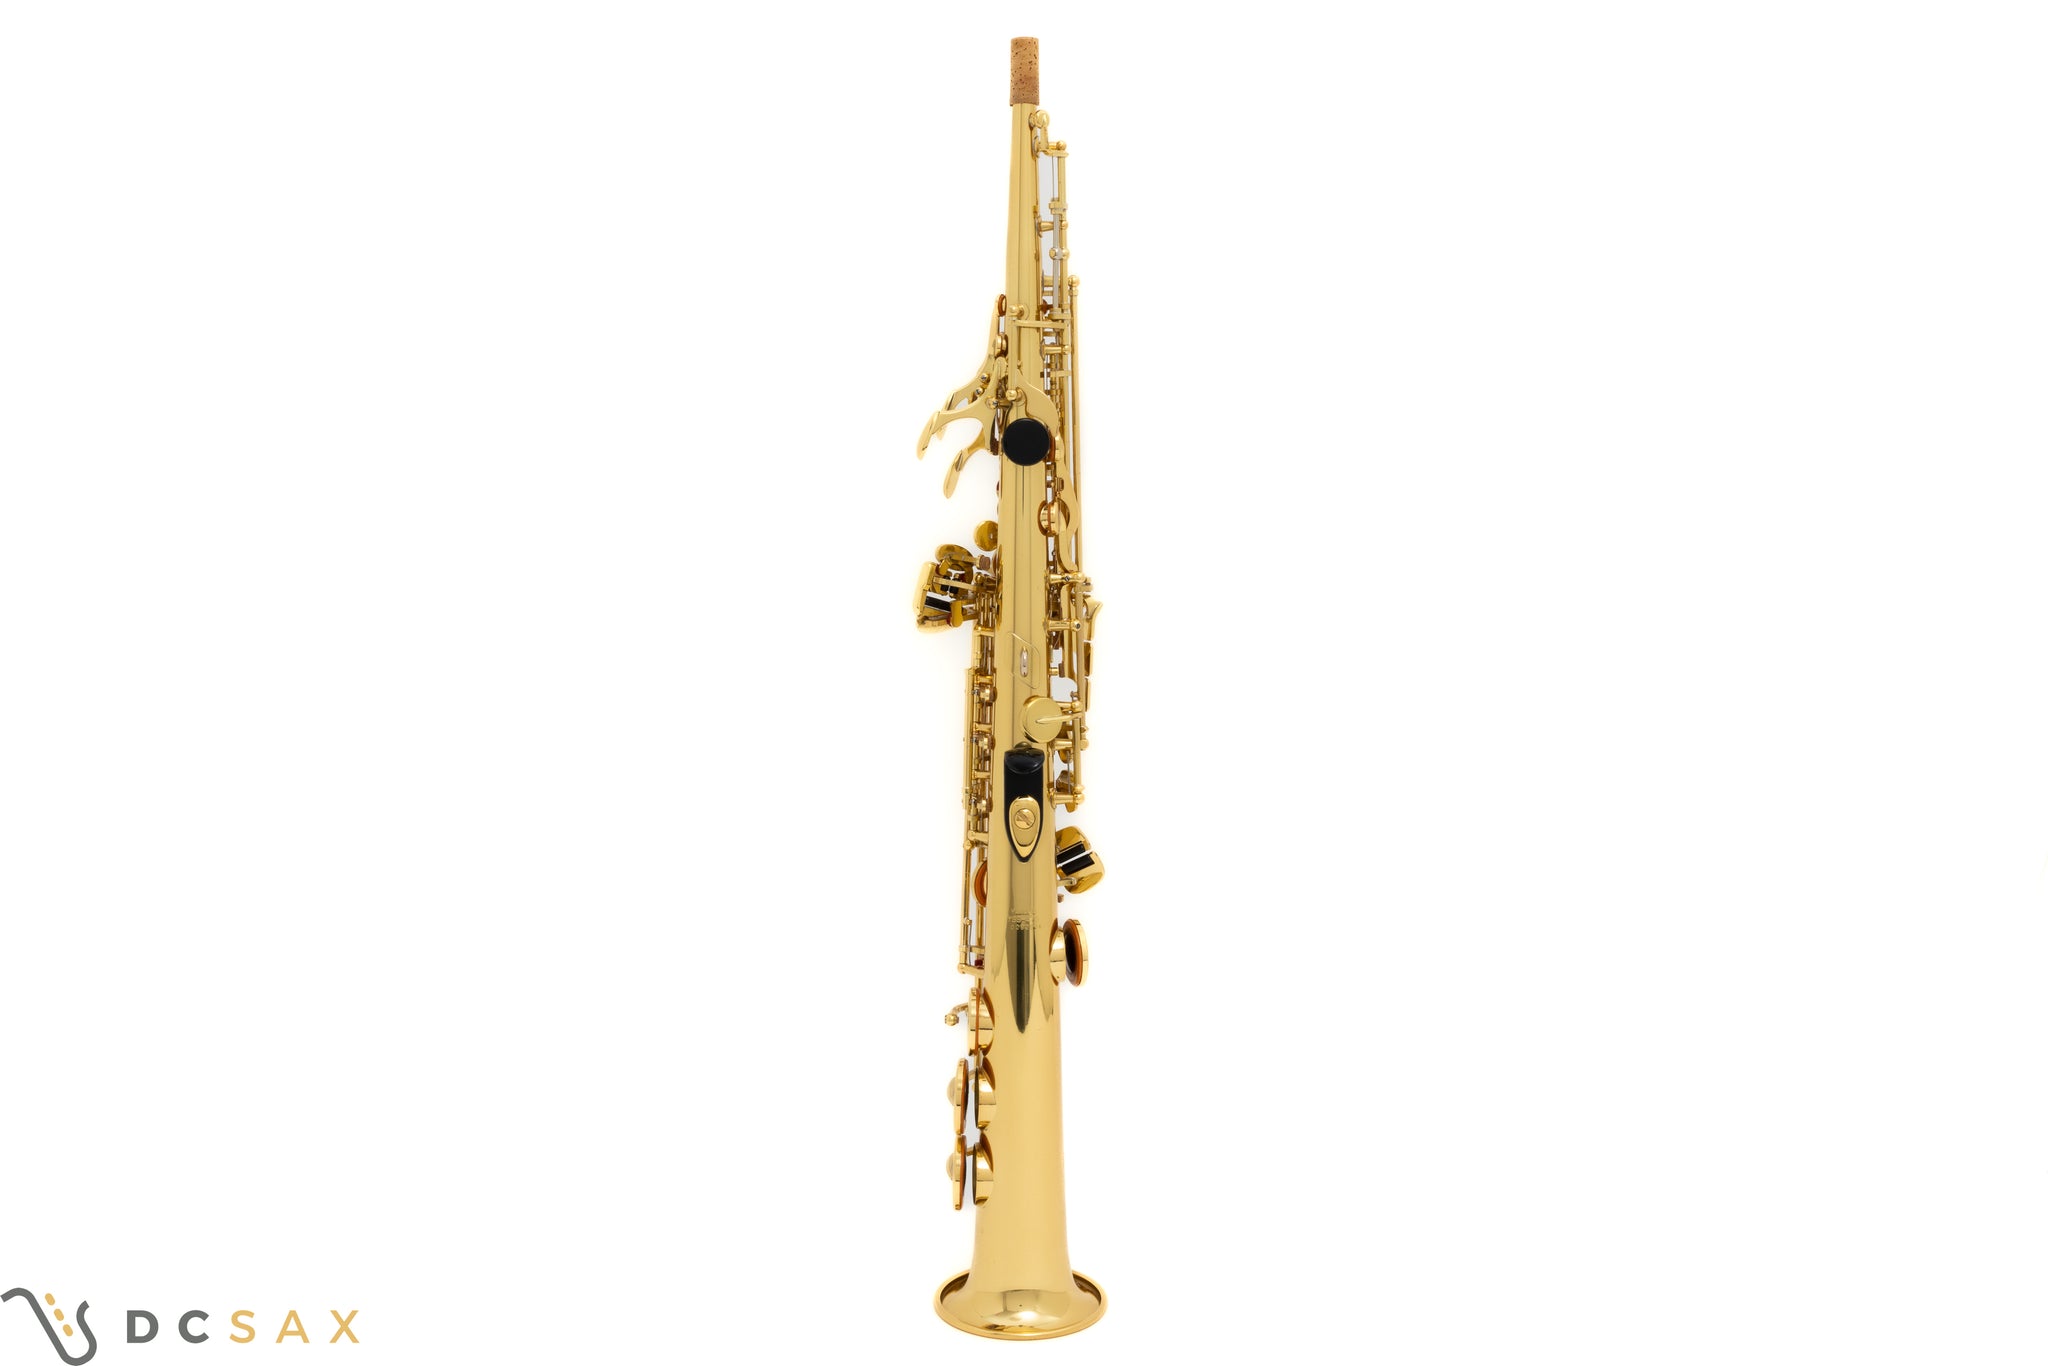 Yamaha YSS-475 Soprano Saxophone, Video, Just Serviced